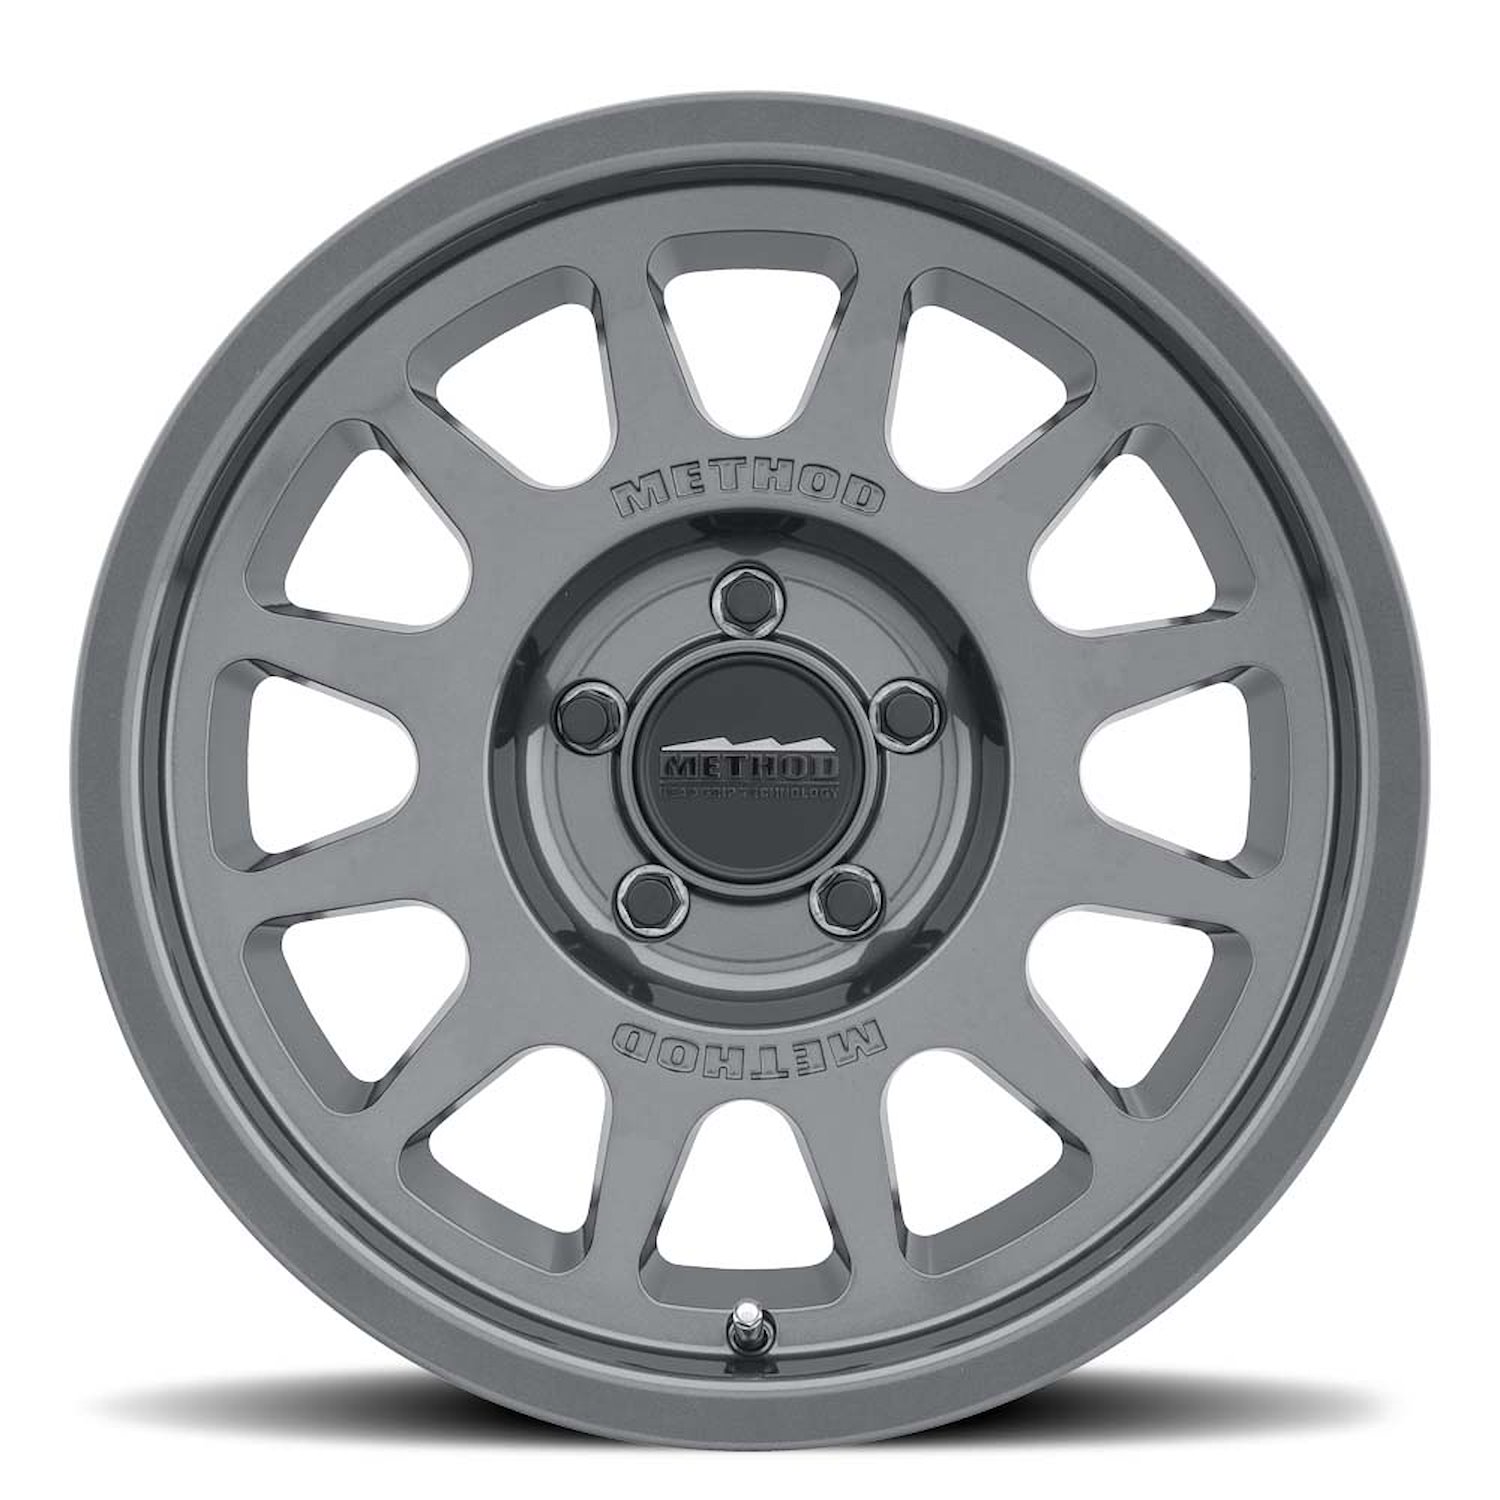 MR70378550800 TRAIL MR703 Bead Grip Wheel [Size: 17" x 8.5"] Gloss Titanium